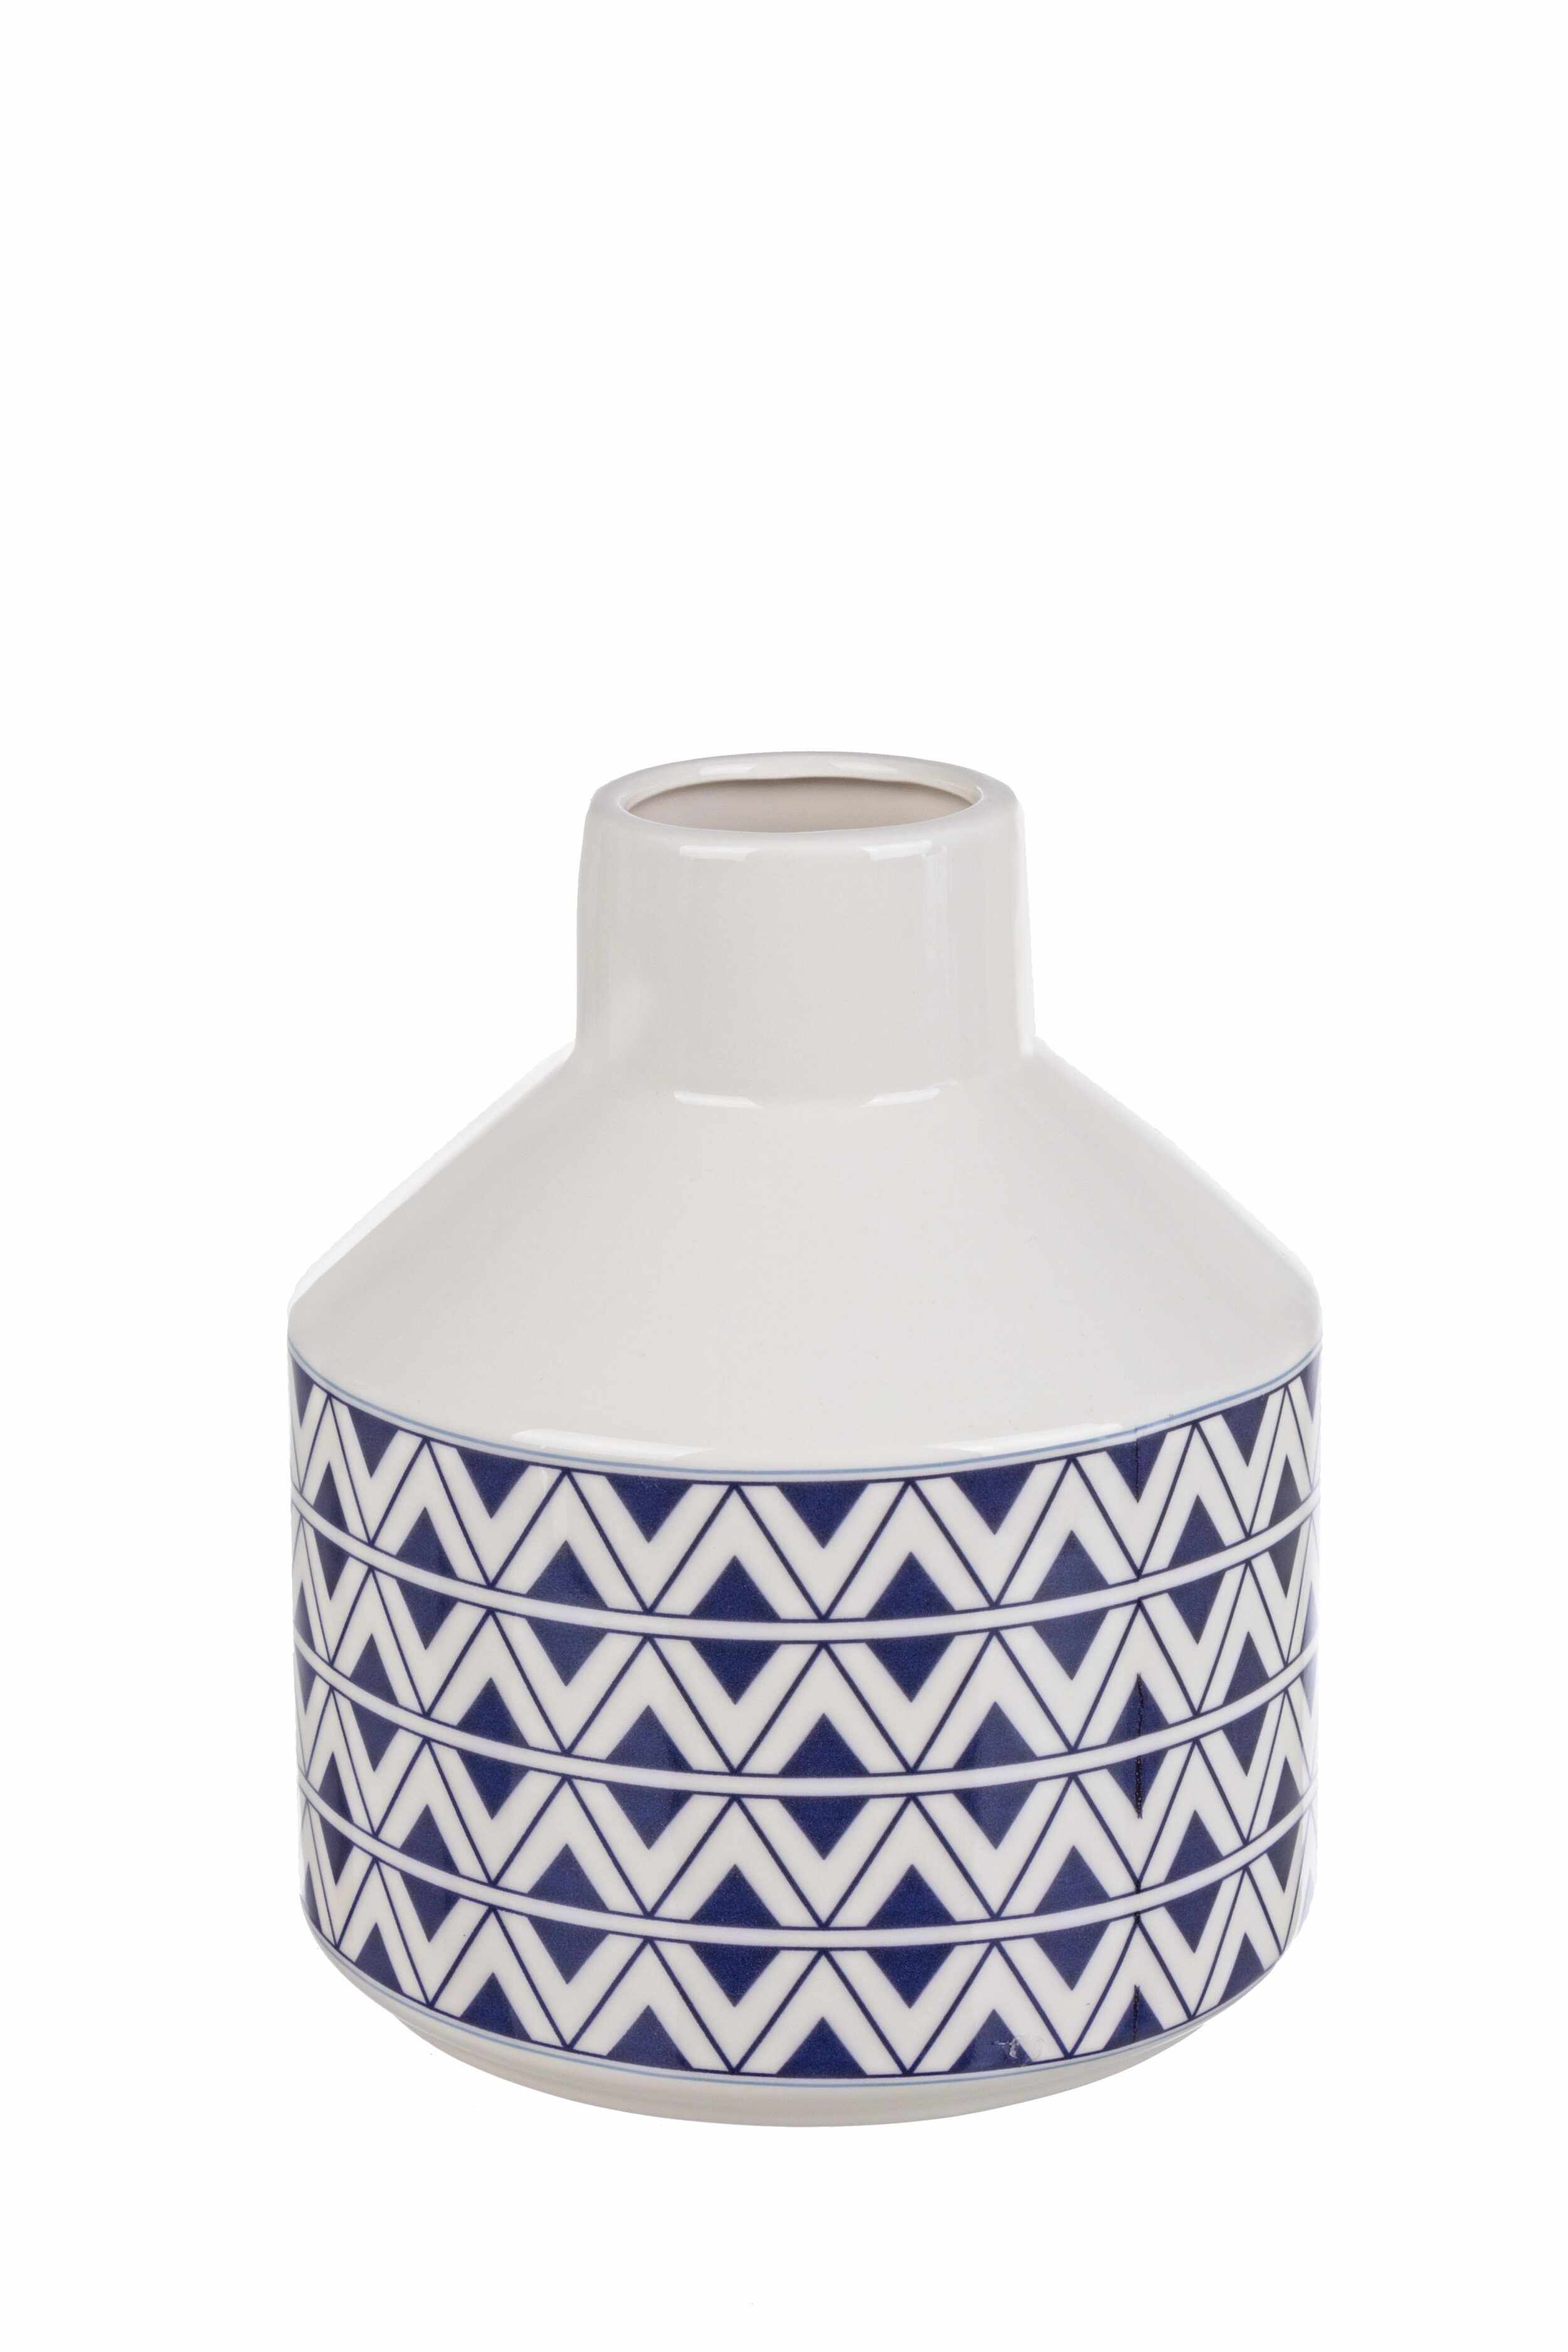 Vaza decorativa din ceramica Tunisi S Alb / Albastru, Ø17xH19,5 cm